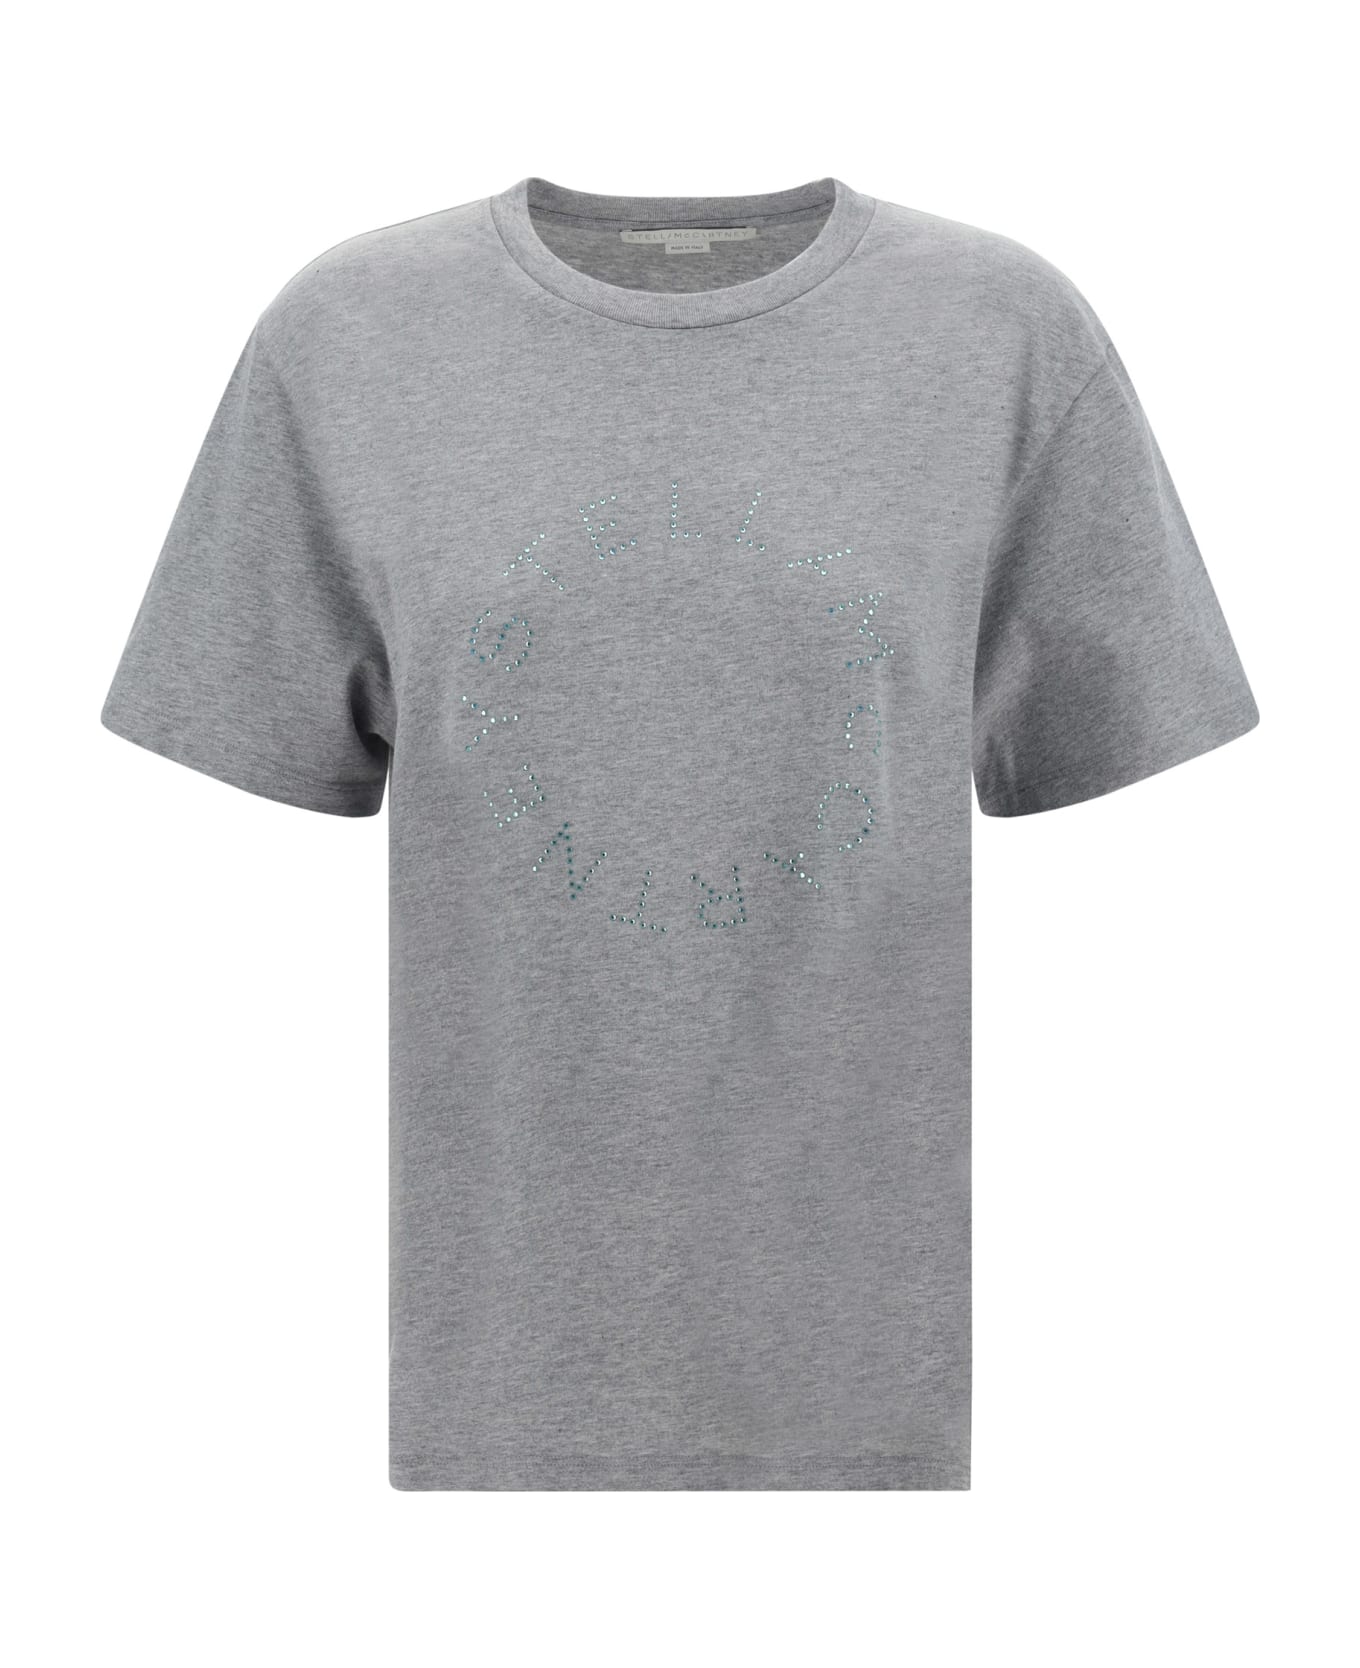 Stella McCartney Rhinestone T-shirt - Grey Melange Tシャツ